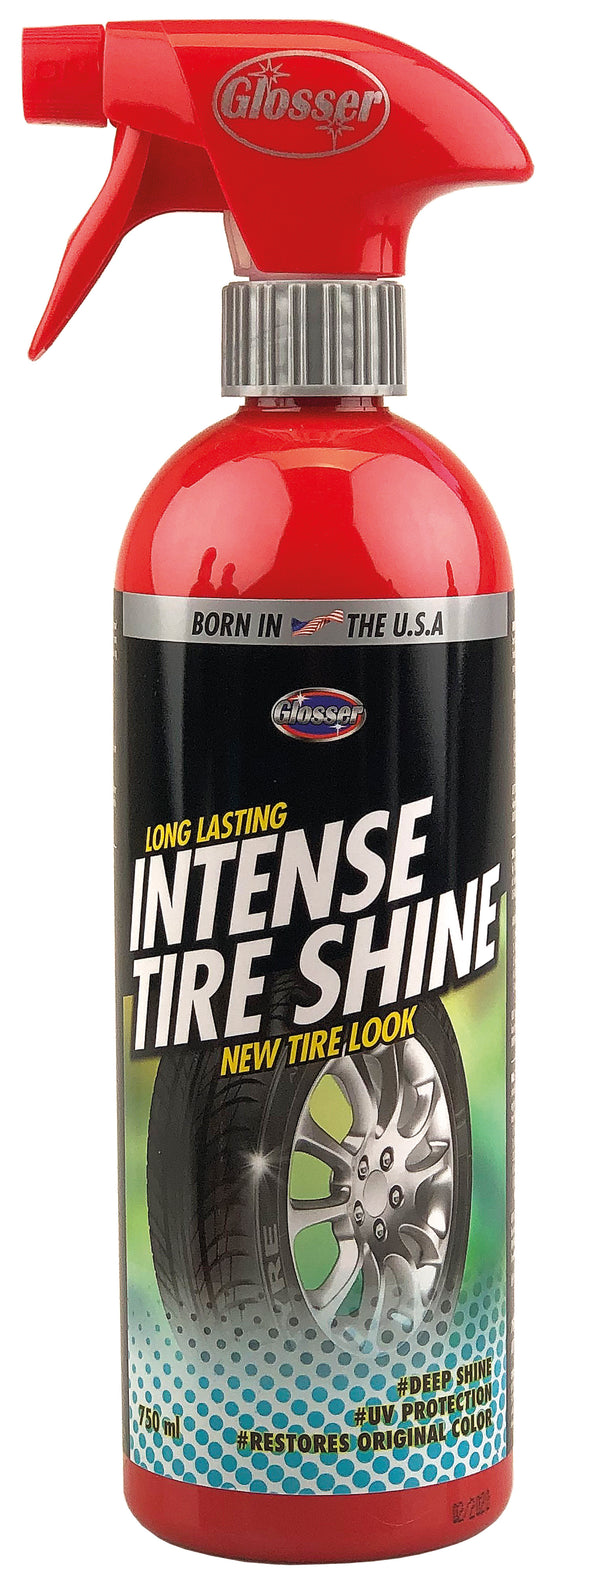 Glosser Intense Tire Shine 750ml.